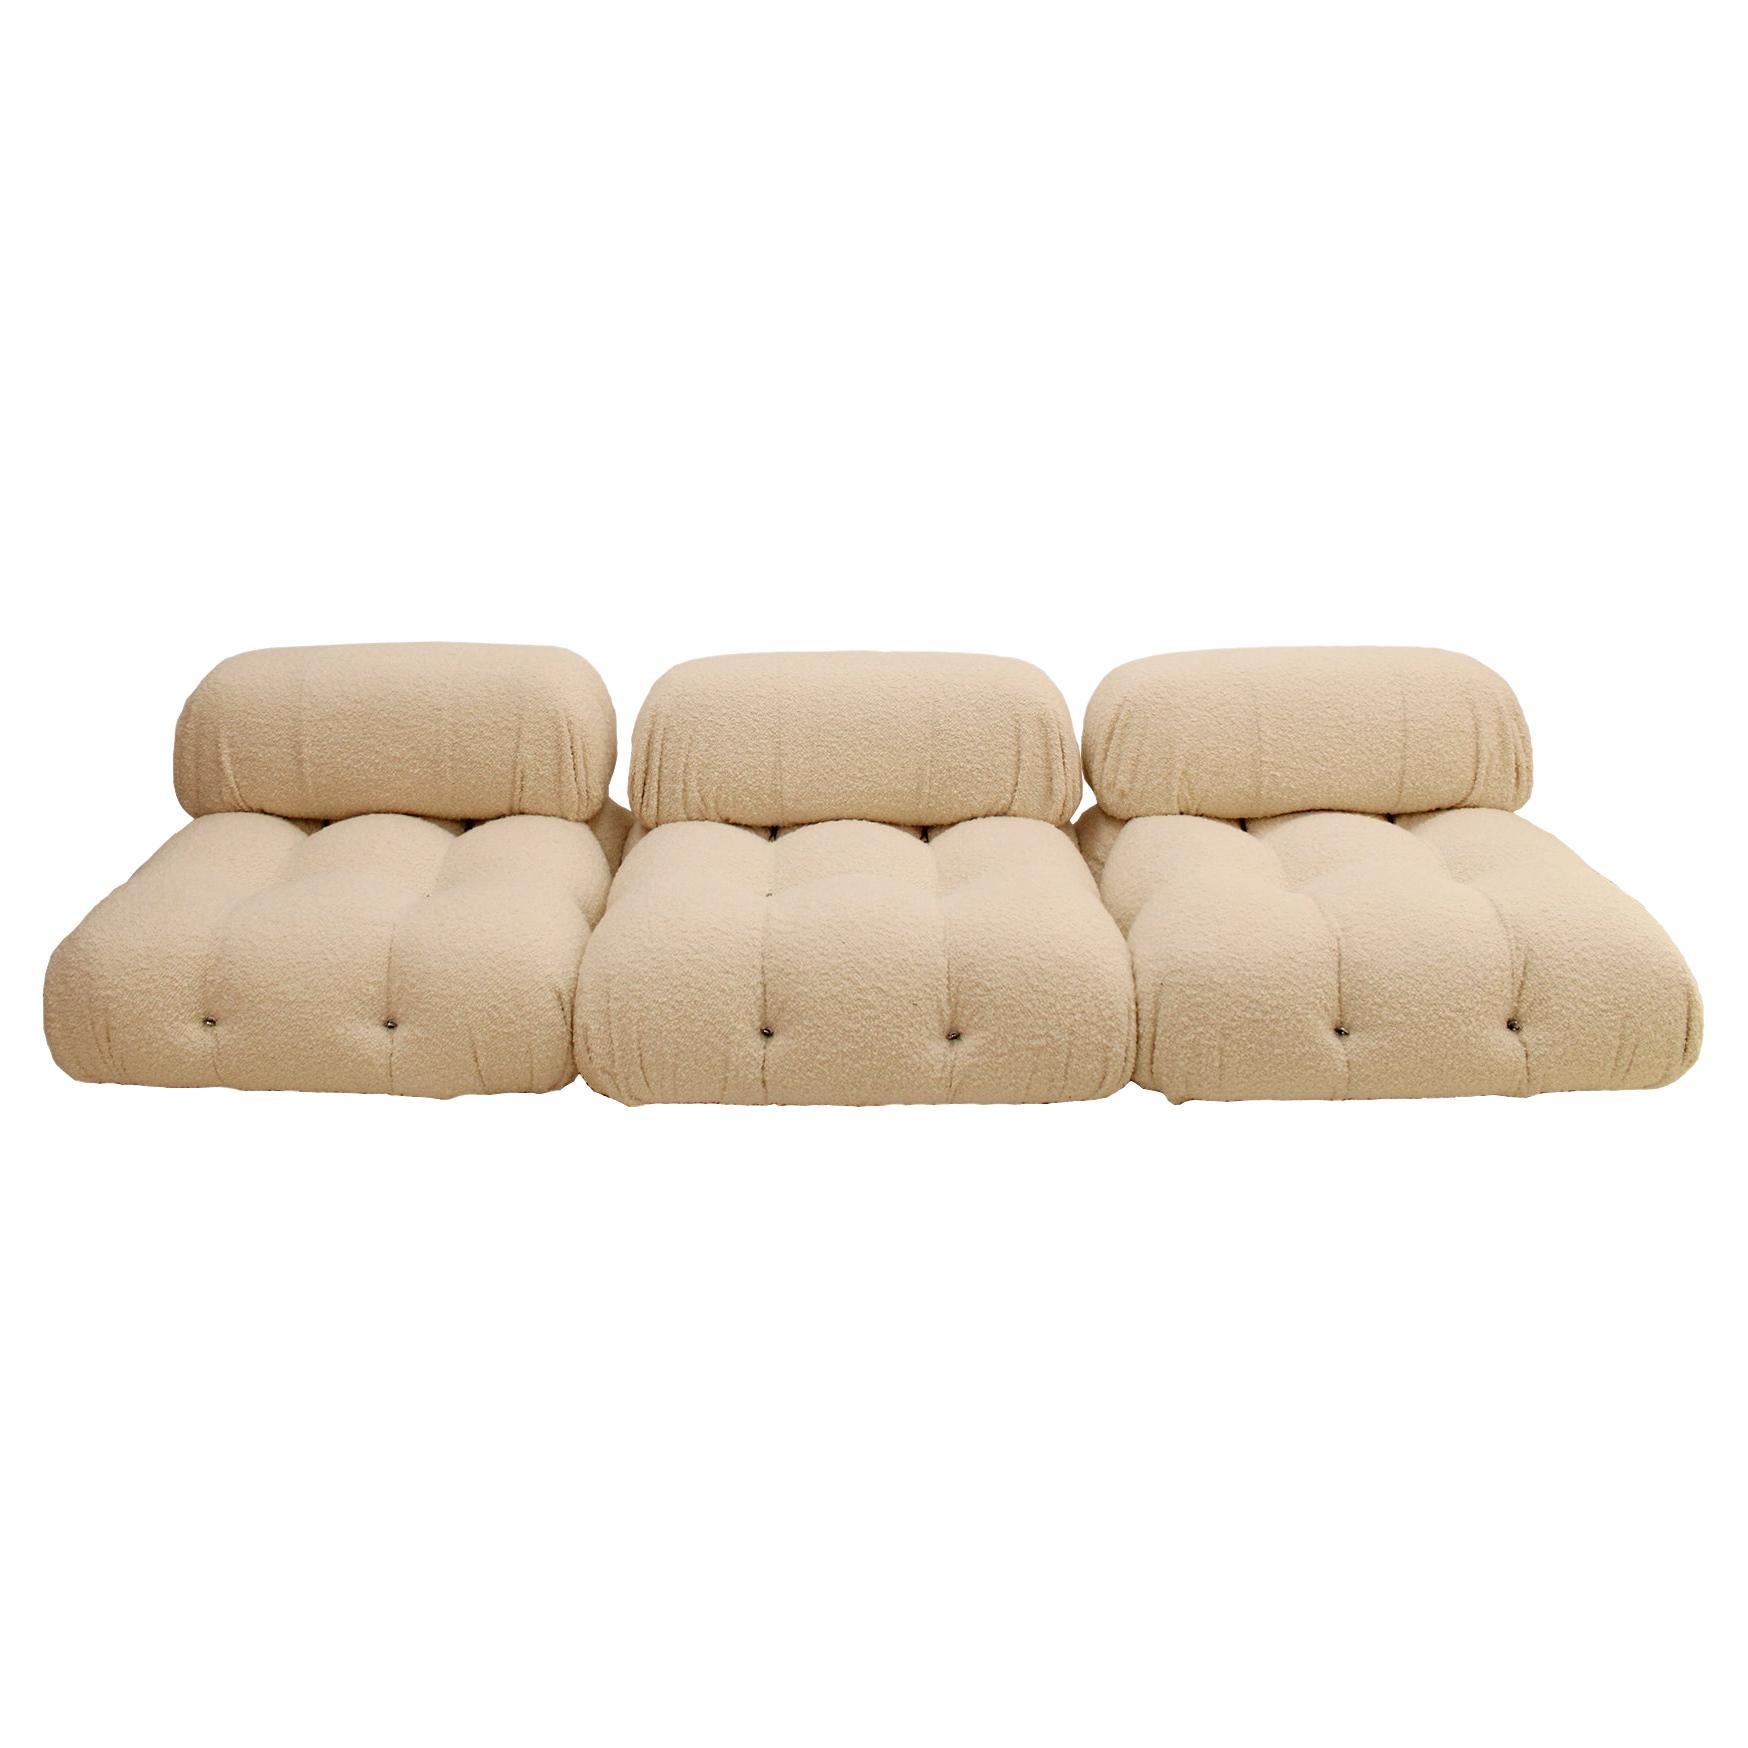 Mario Bellini B&B Italia Camaleonda White Bouclé Fabric Modular Sofa 3 Seater For Sale